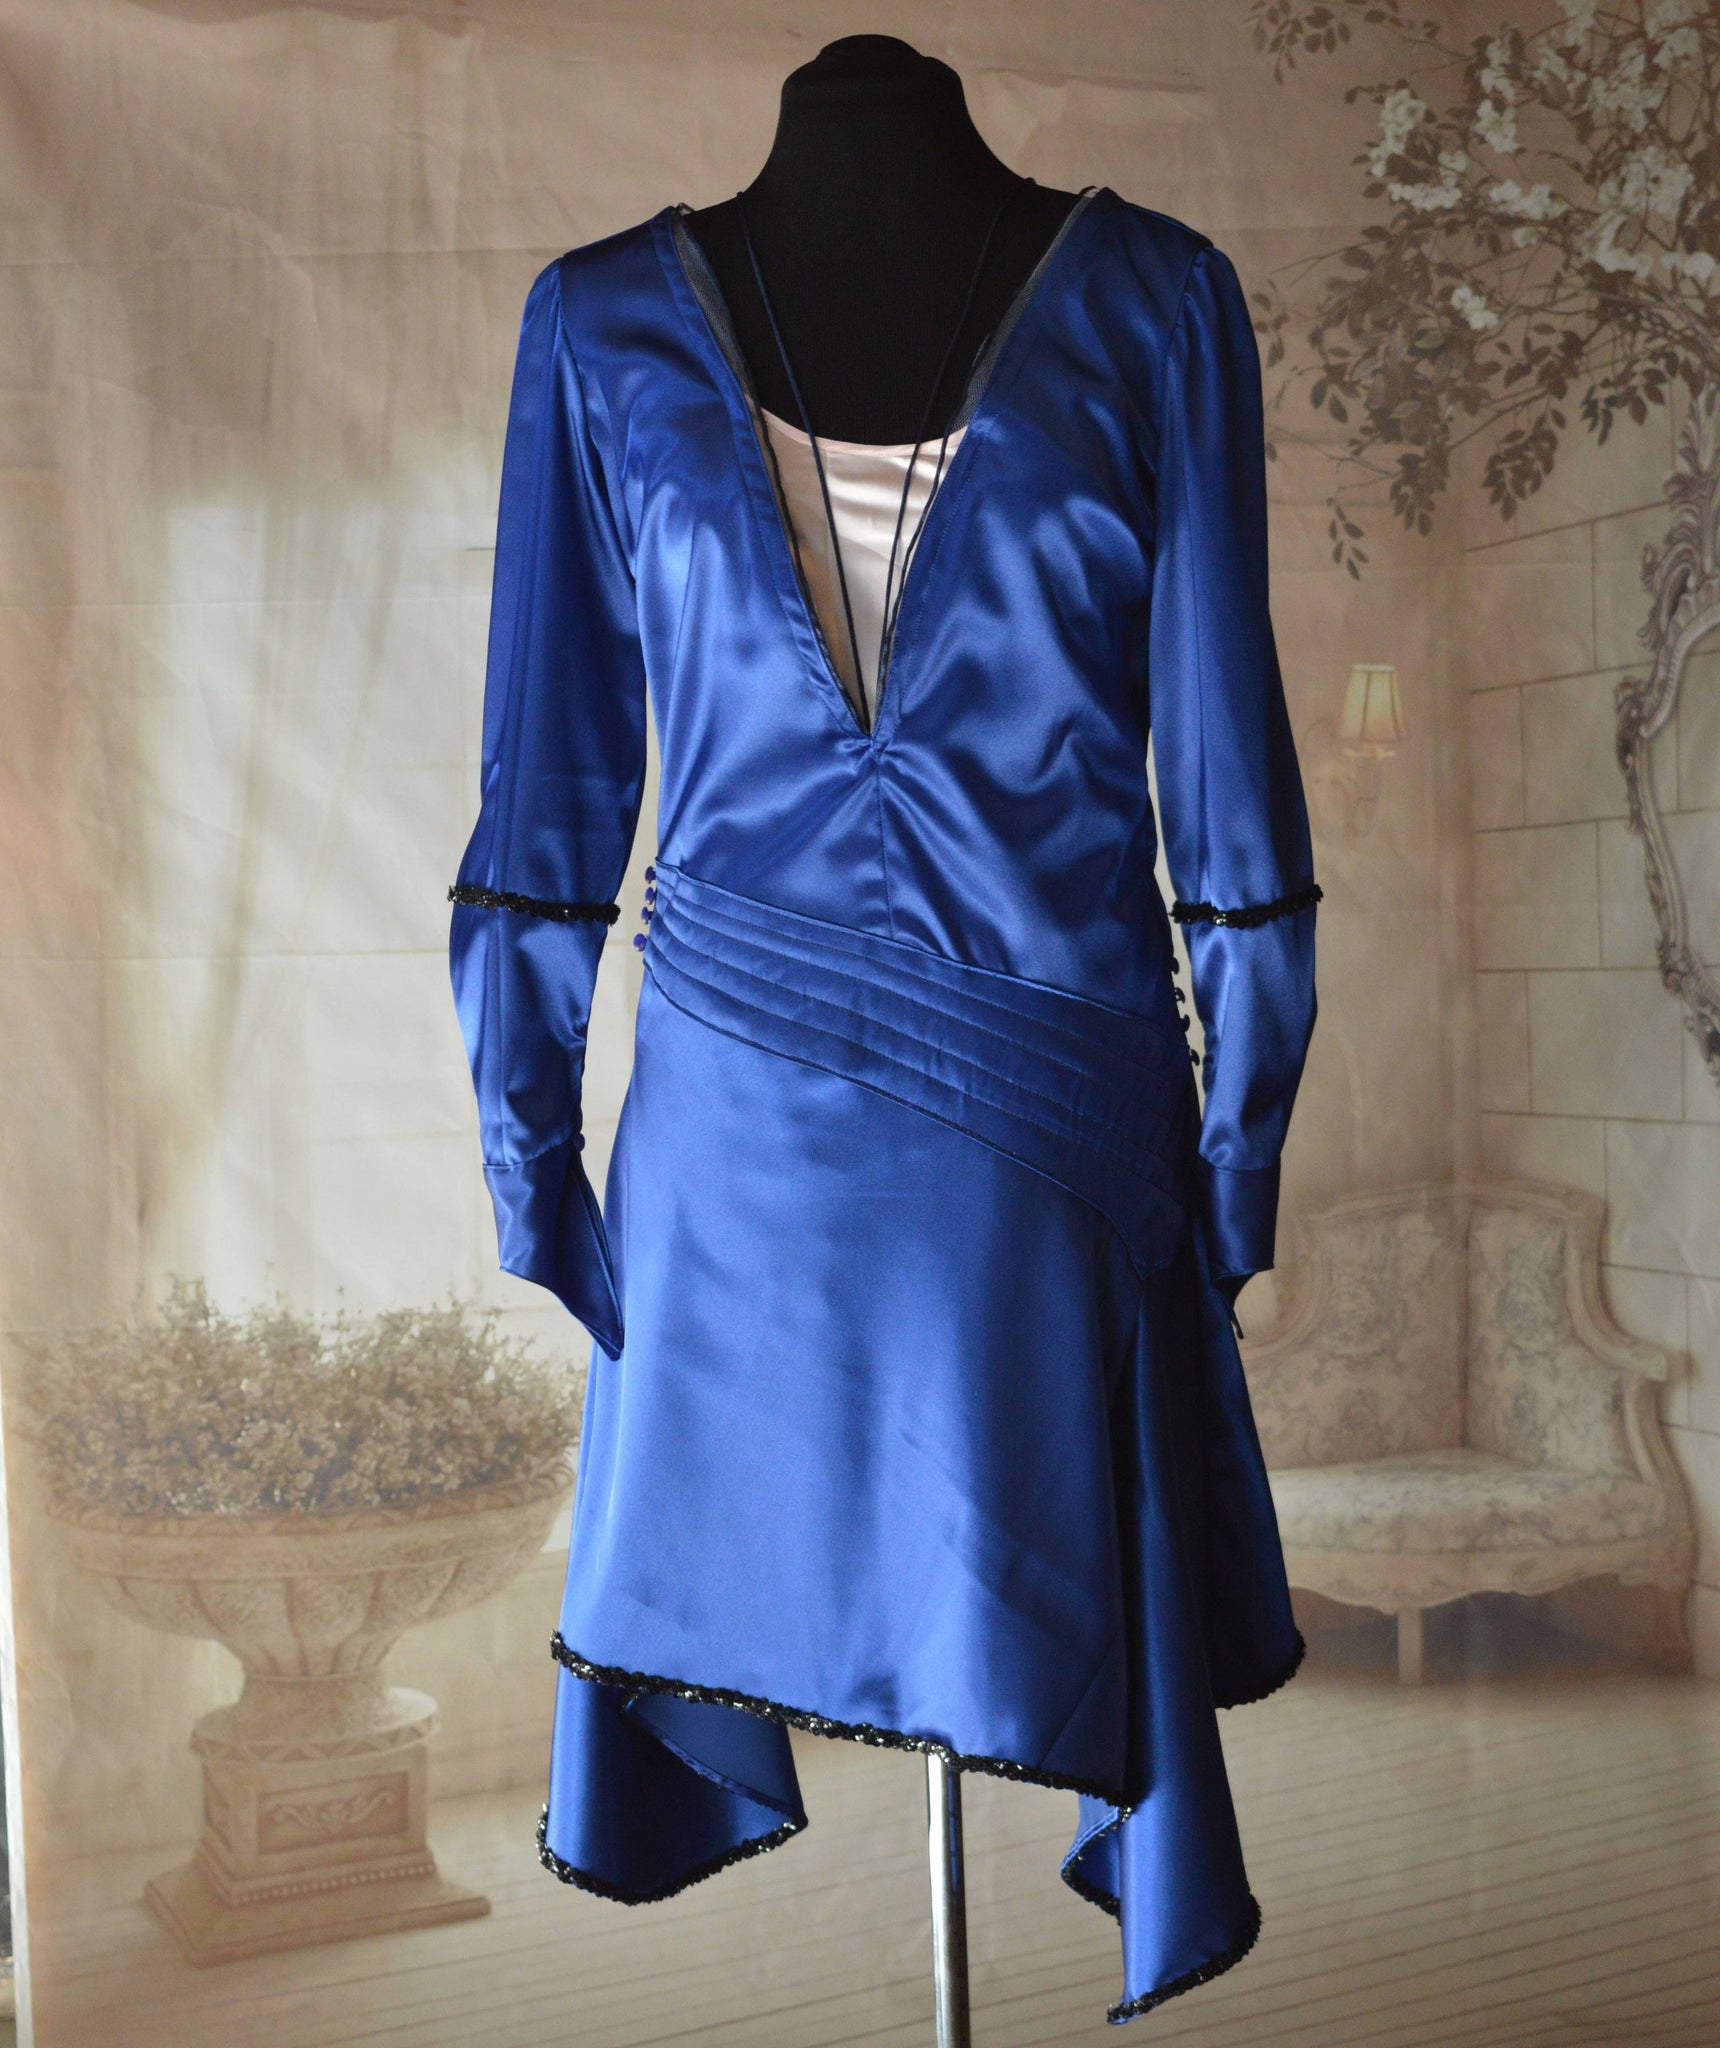 Fantastic Beasts Blue Dress Vintage 1920s Movie dress Flapper dress Inspired by Queenie Goldstein dress cosplay costume